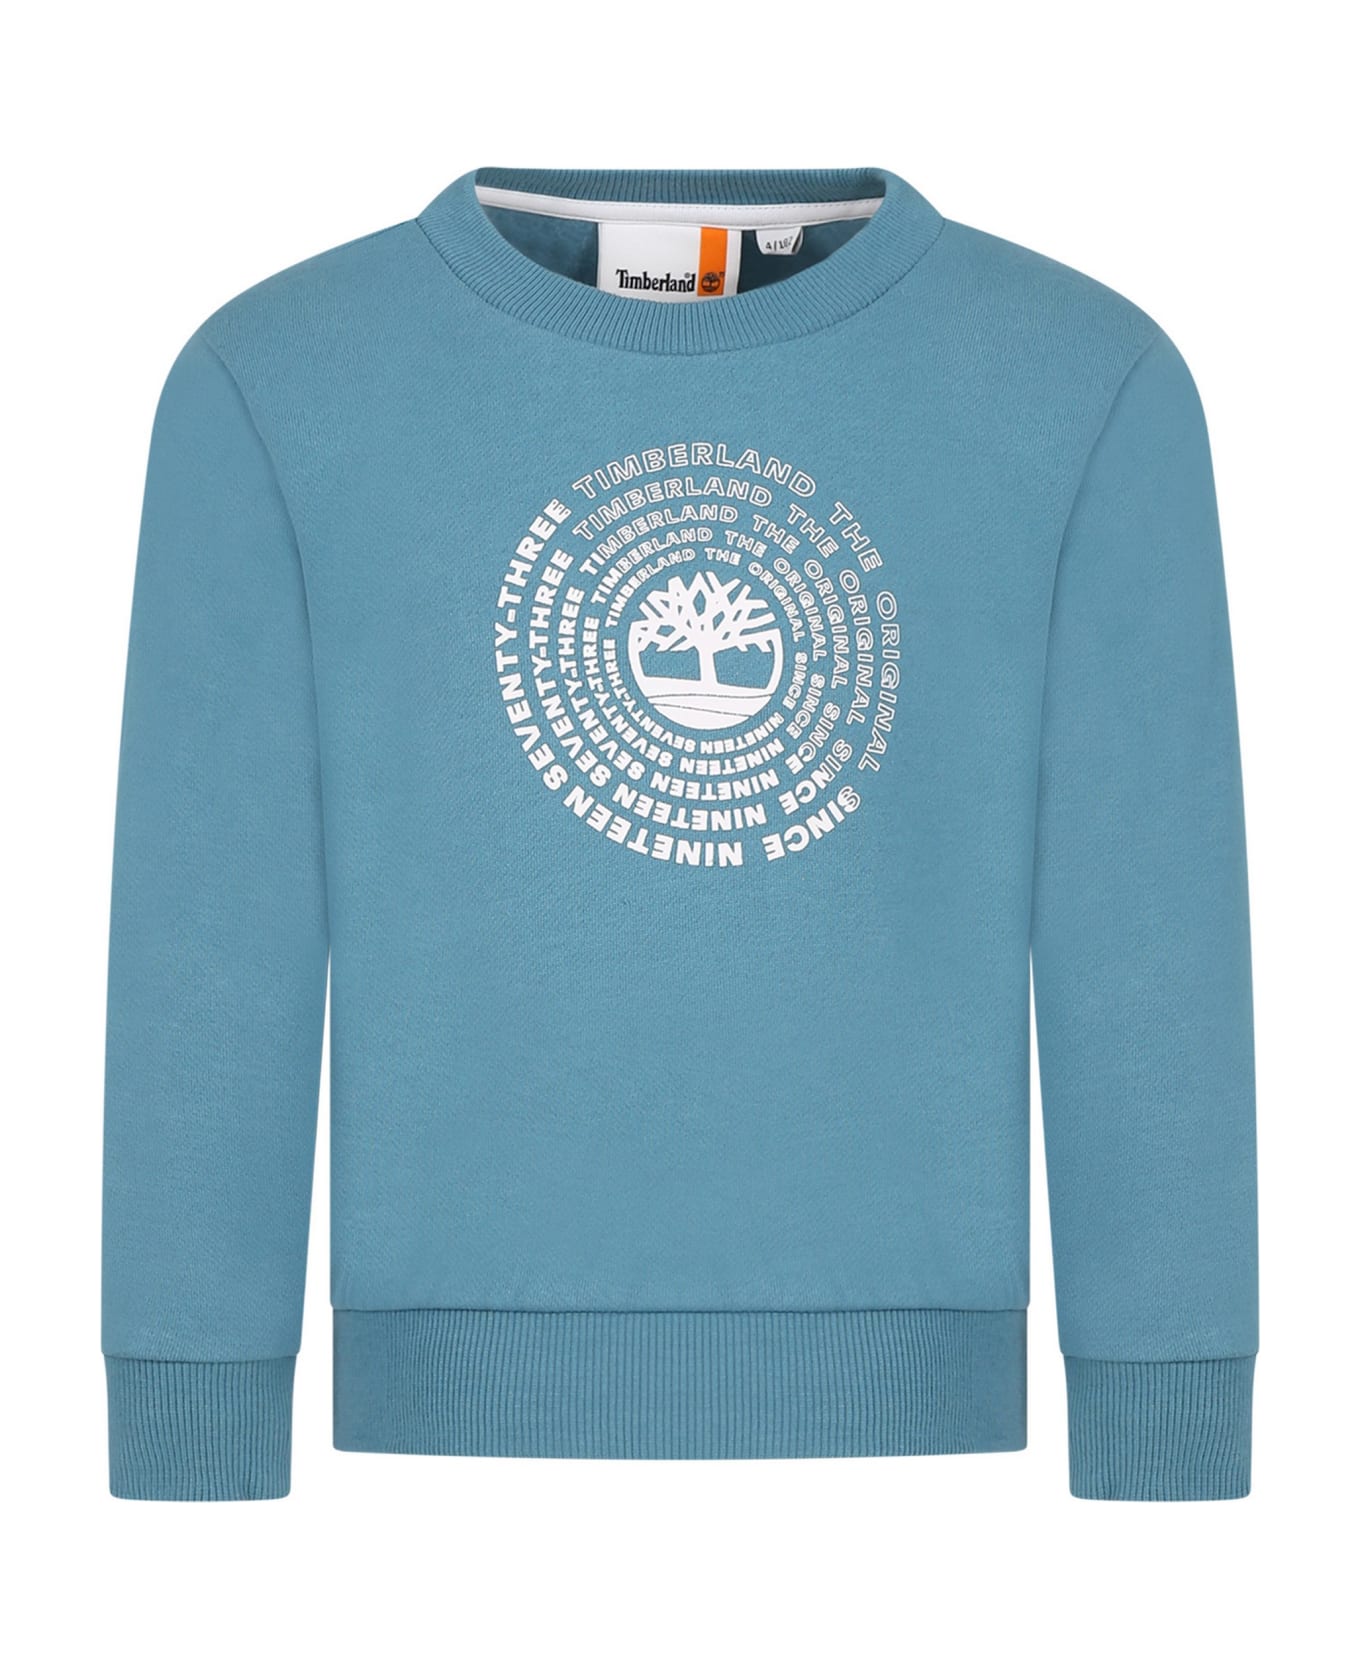 Timberland Light Blue Sweatshirt For Boy With Print Logo - Light Blue